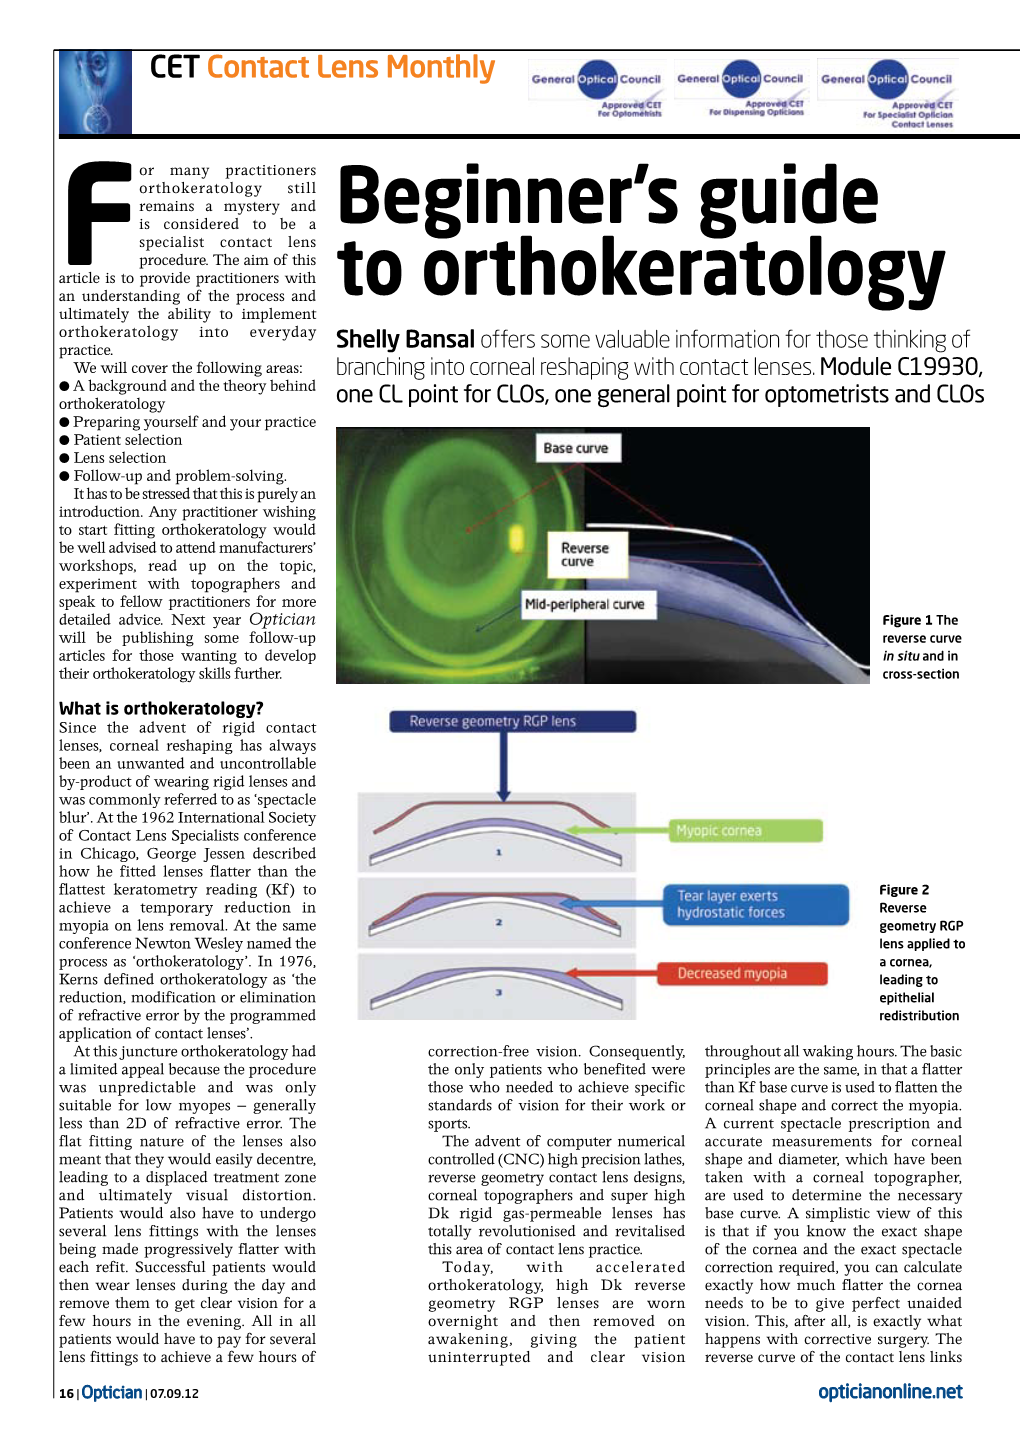 Beginner's Guide to Orthokeratology